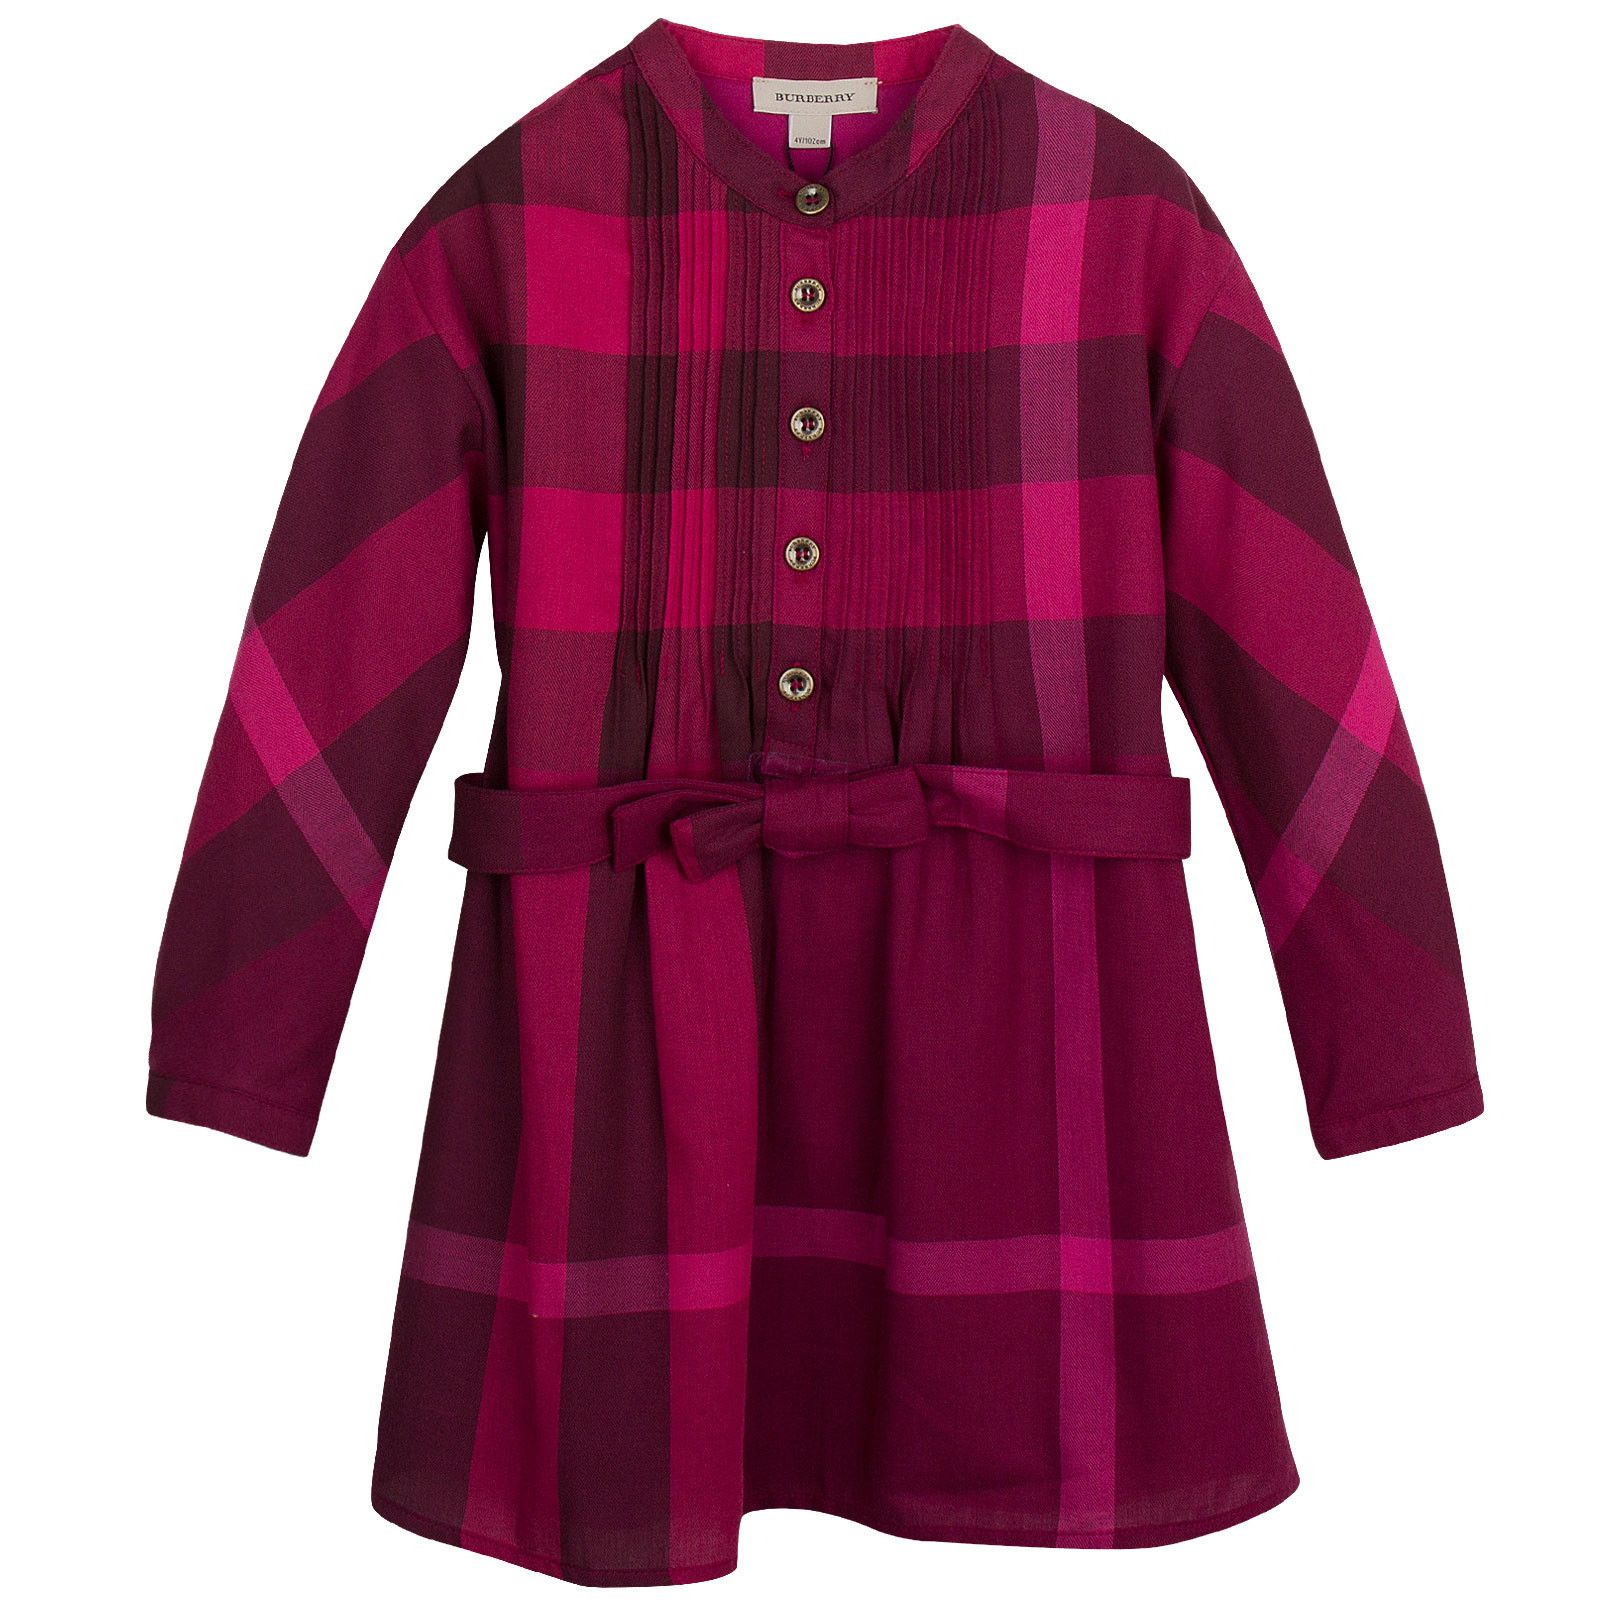 Girls Dark Pink Cotton Check Dress With Bow Belt - CÉMAROSE | Children's Fashion Store - 1